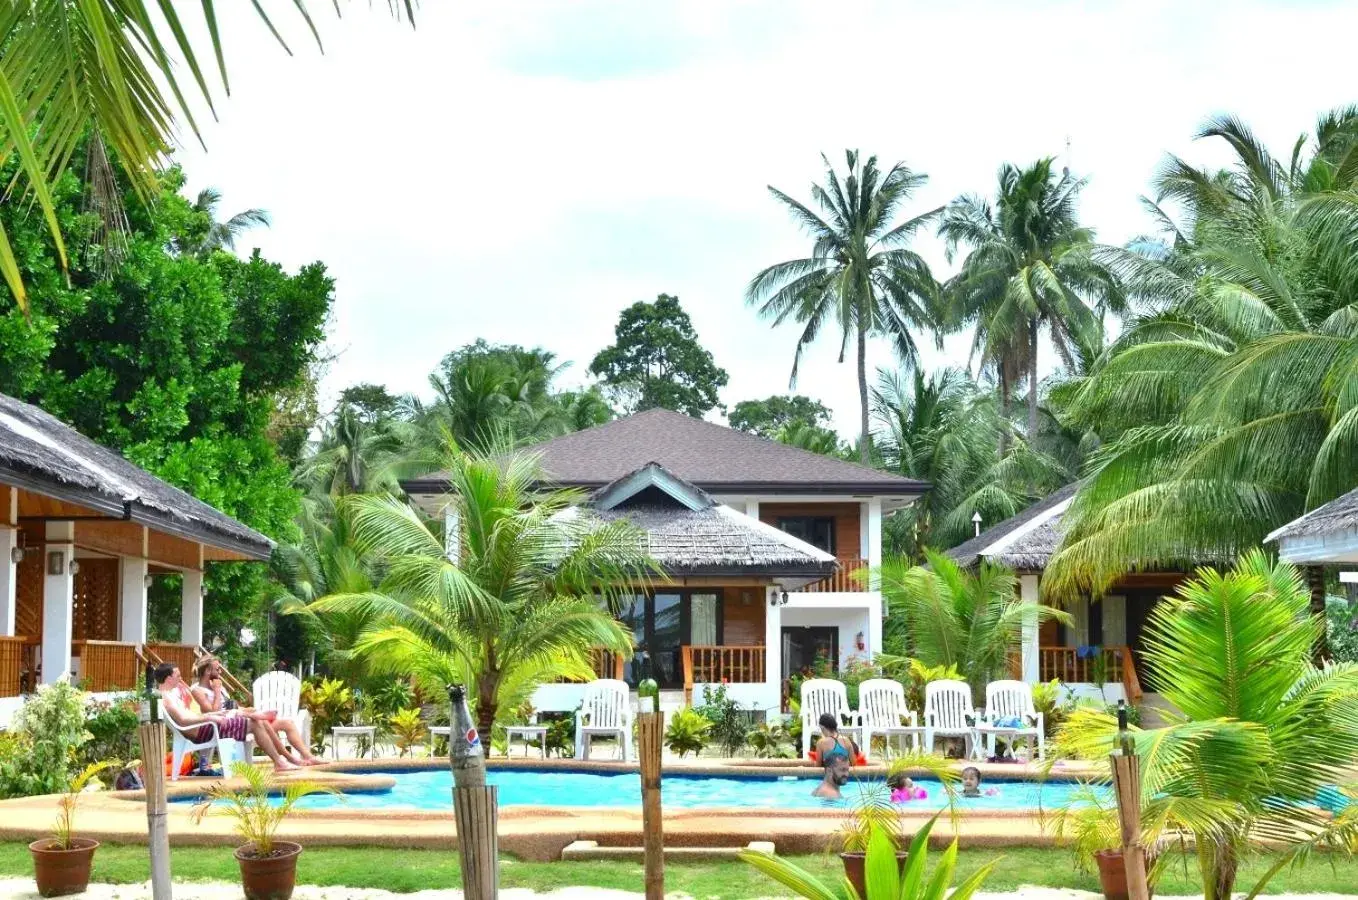 Property building, Swimming Pool in White Villas Resort